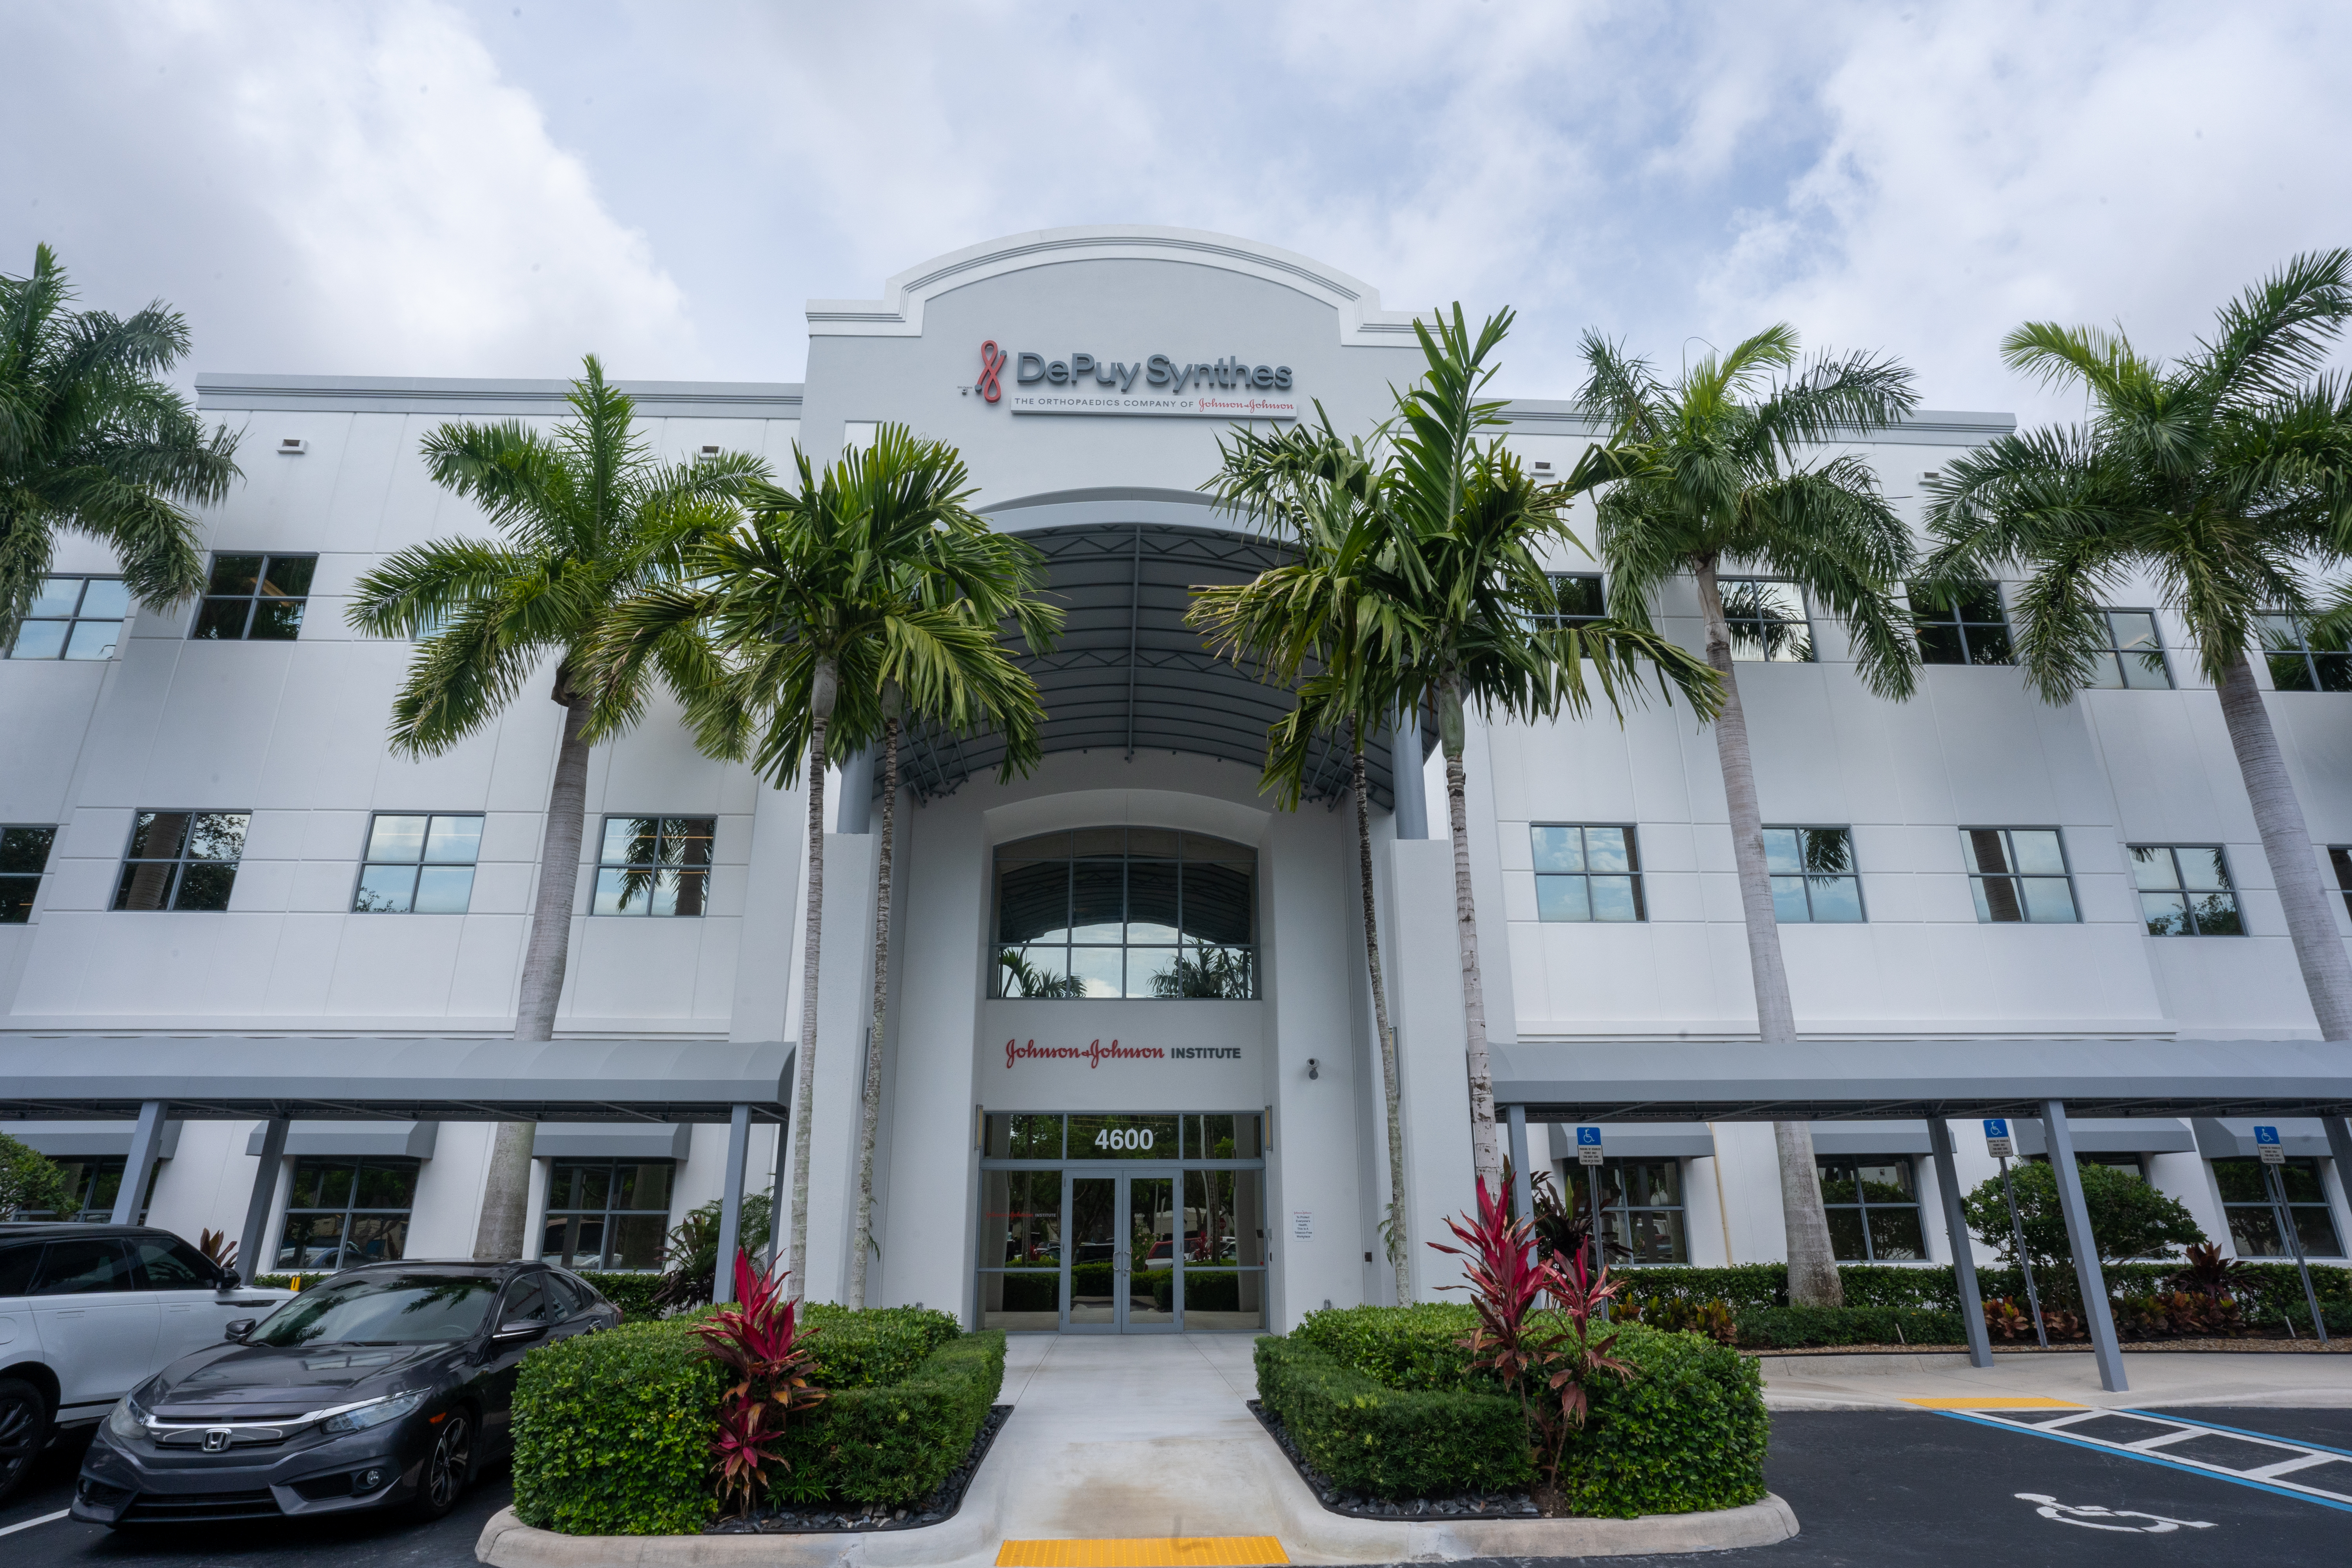 Entrance of the Johnson & Johnson Institute facility location in Palm Beach Gardens, FL